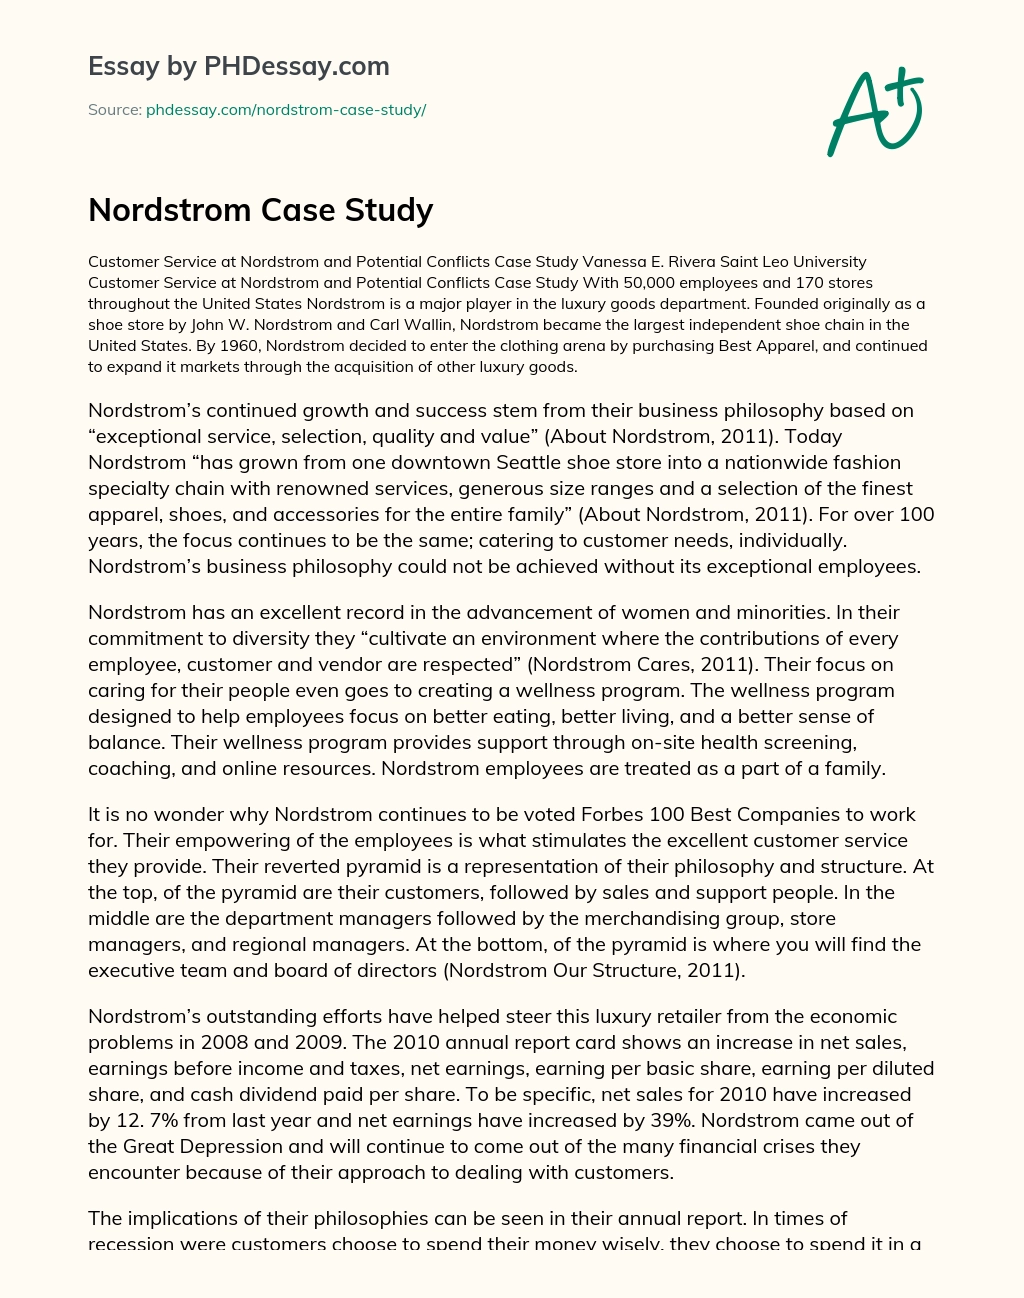 Nordstrom Case Study essay